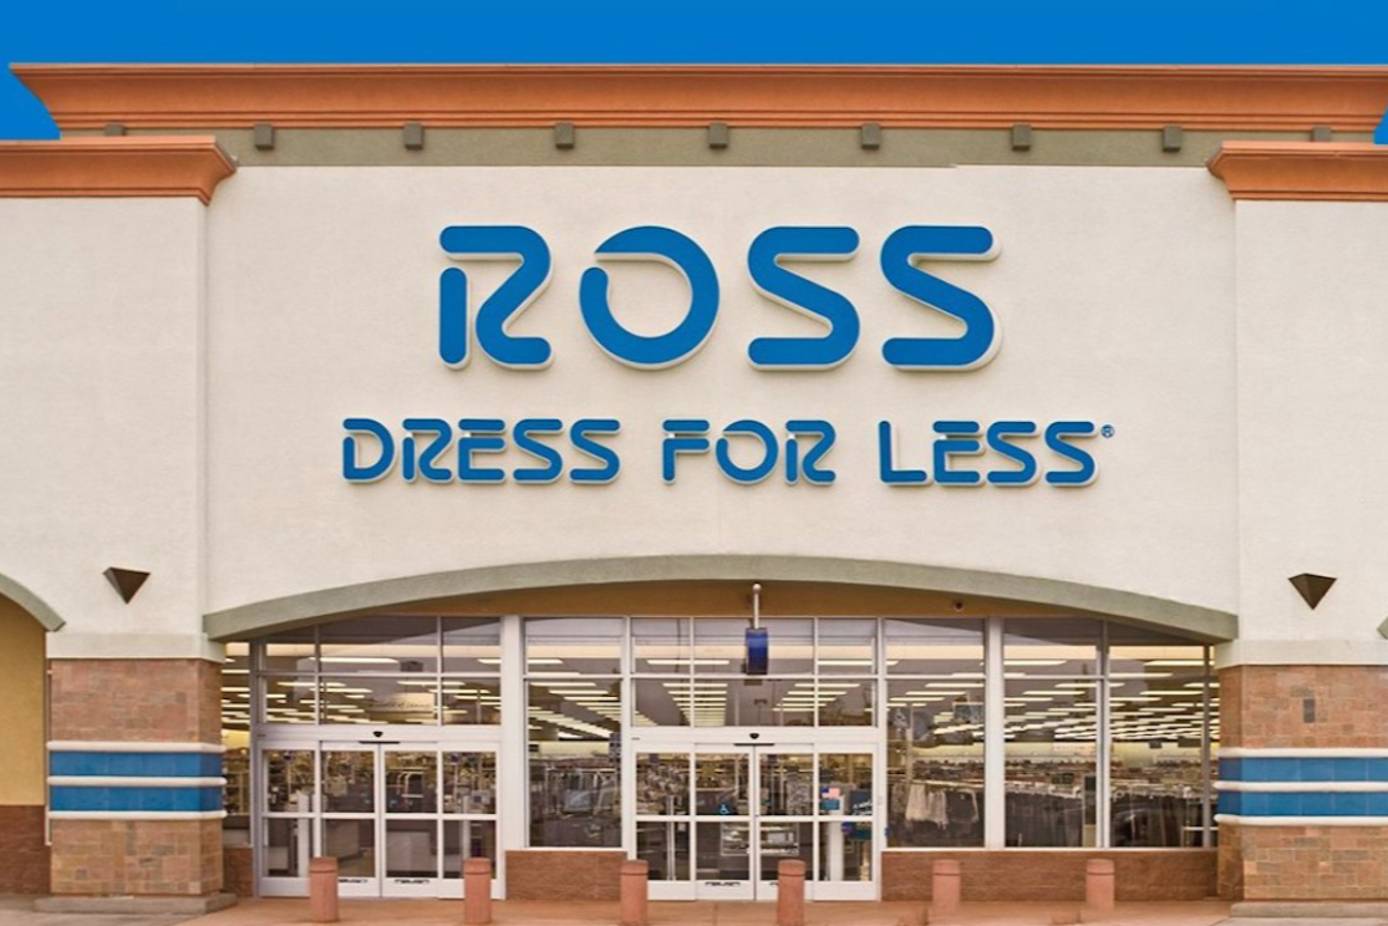 Ross Dress for Less added a new photo. - Ross Dress for Less